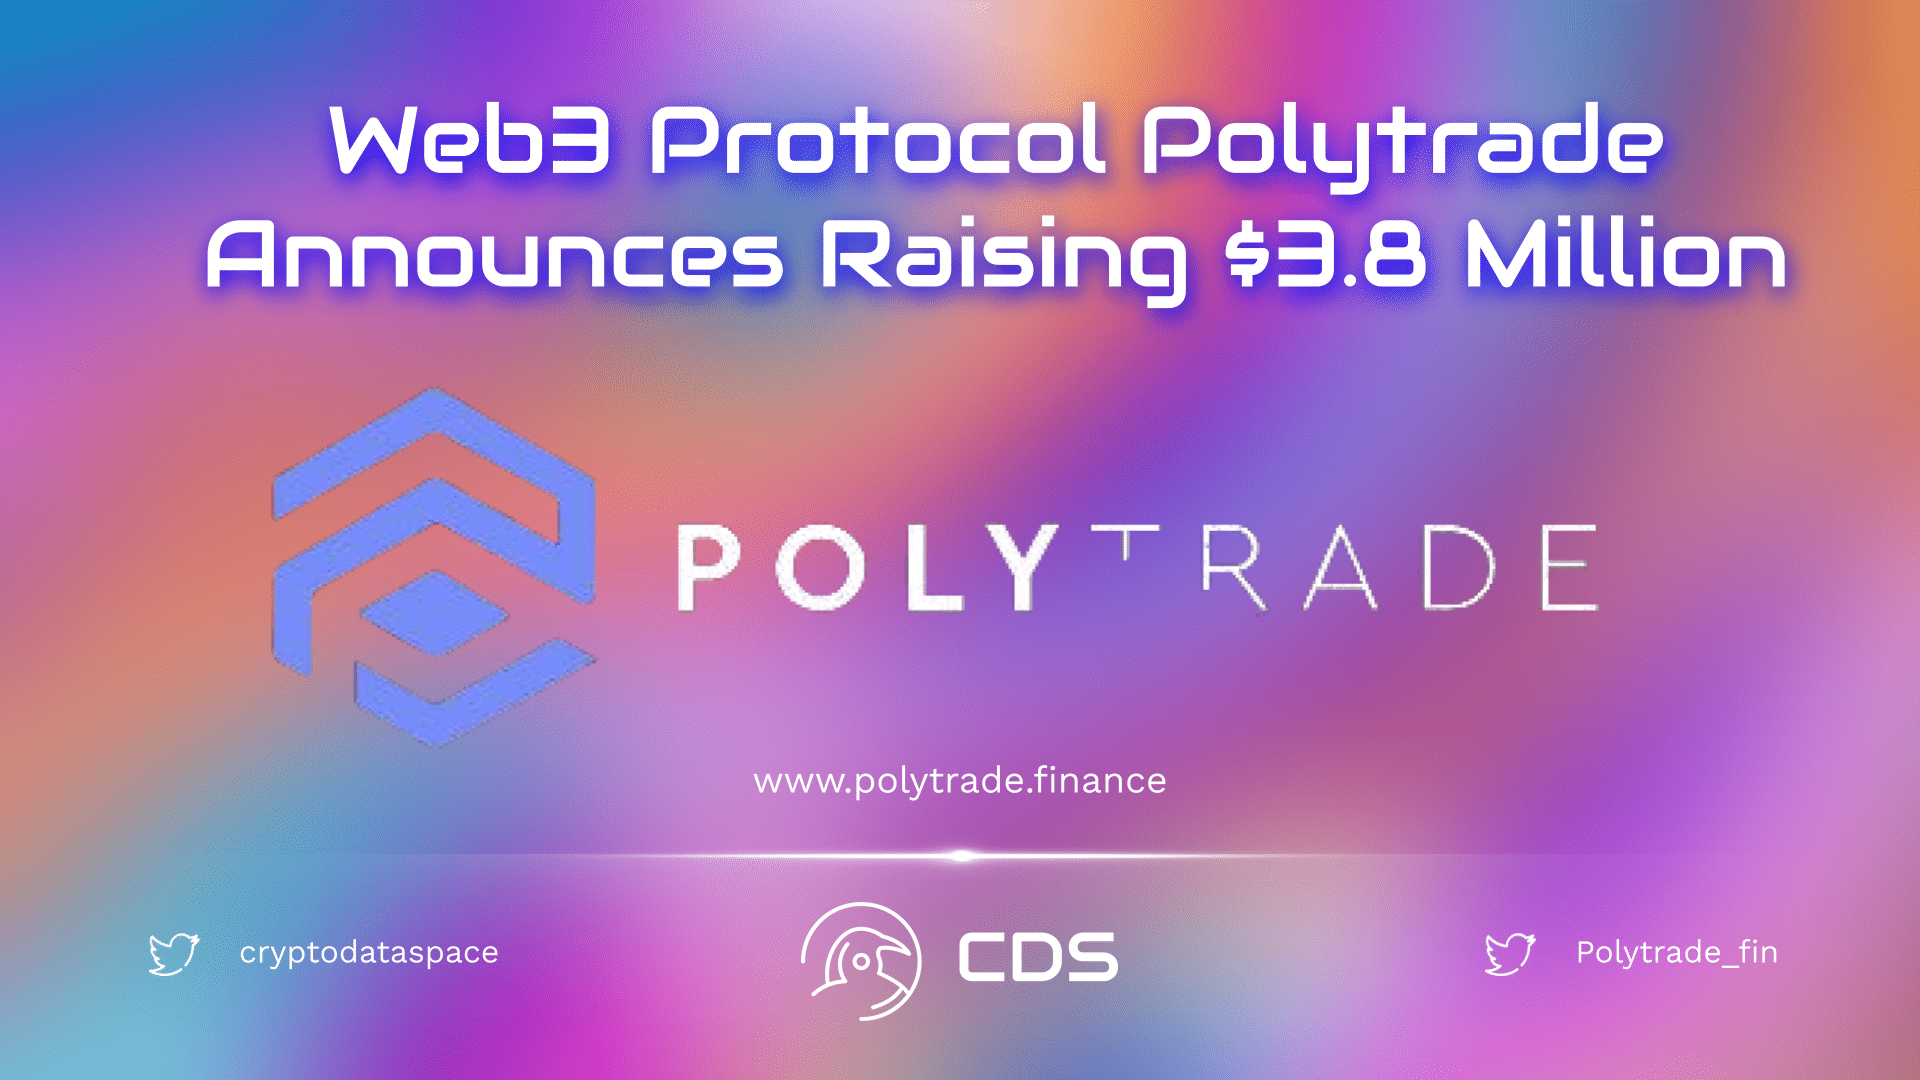 Web3 Protocol Polytrade Announces Raising $3.8 Million